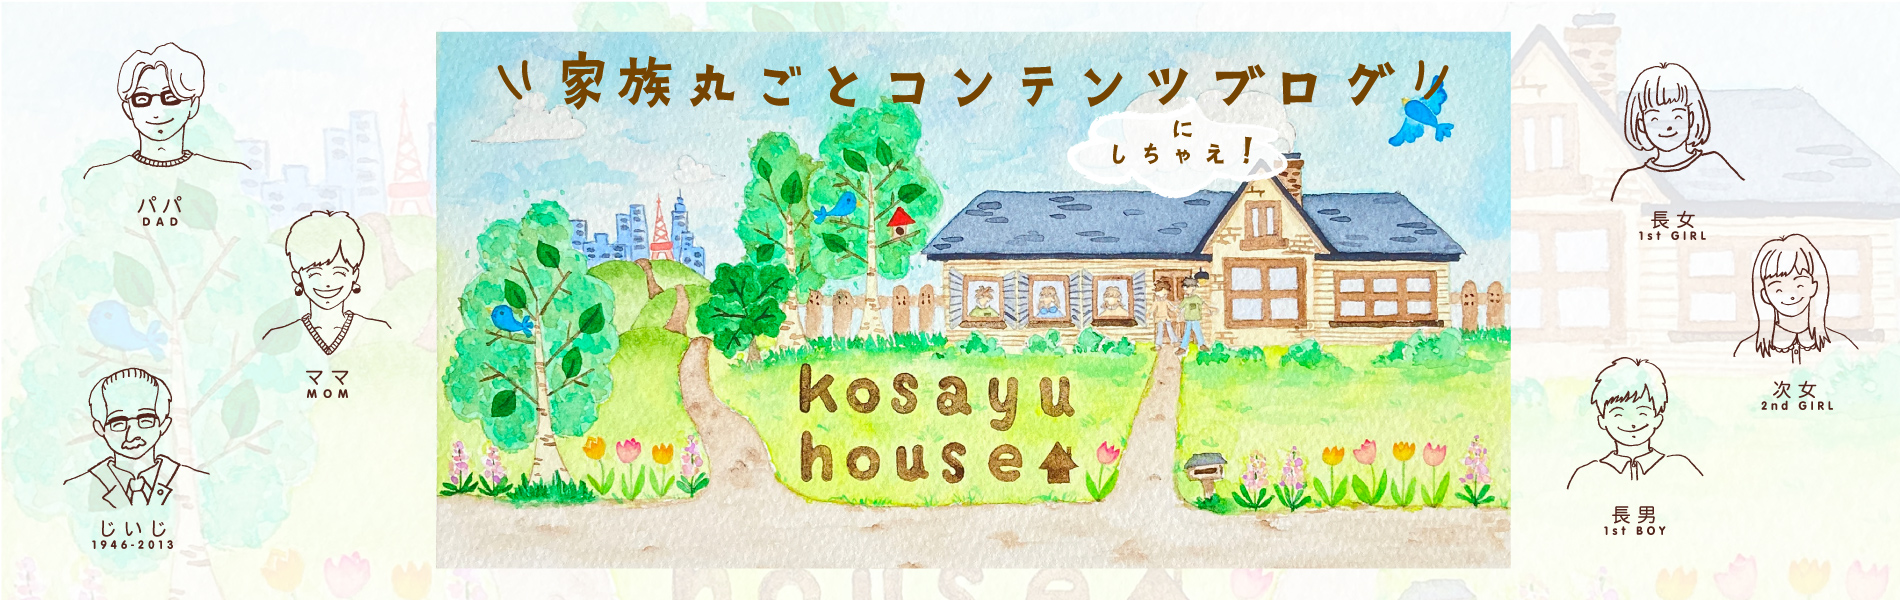 kosayu house watercolor image